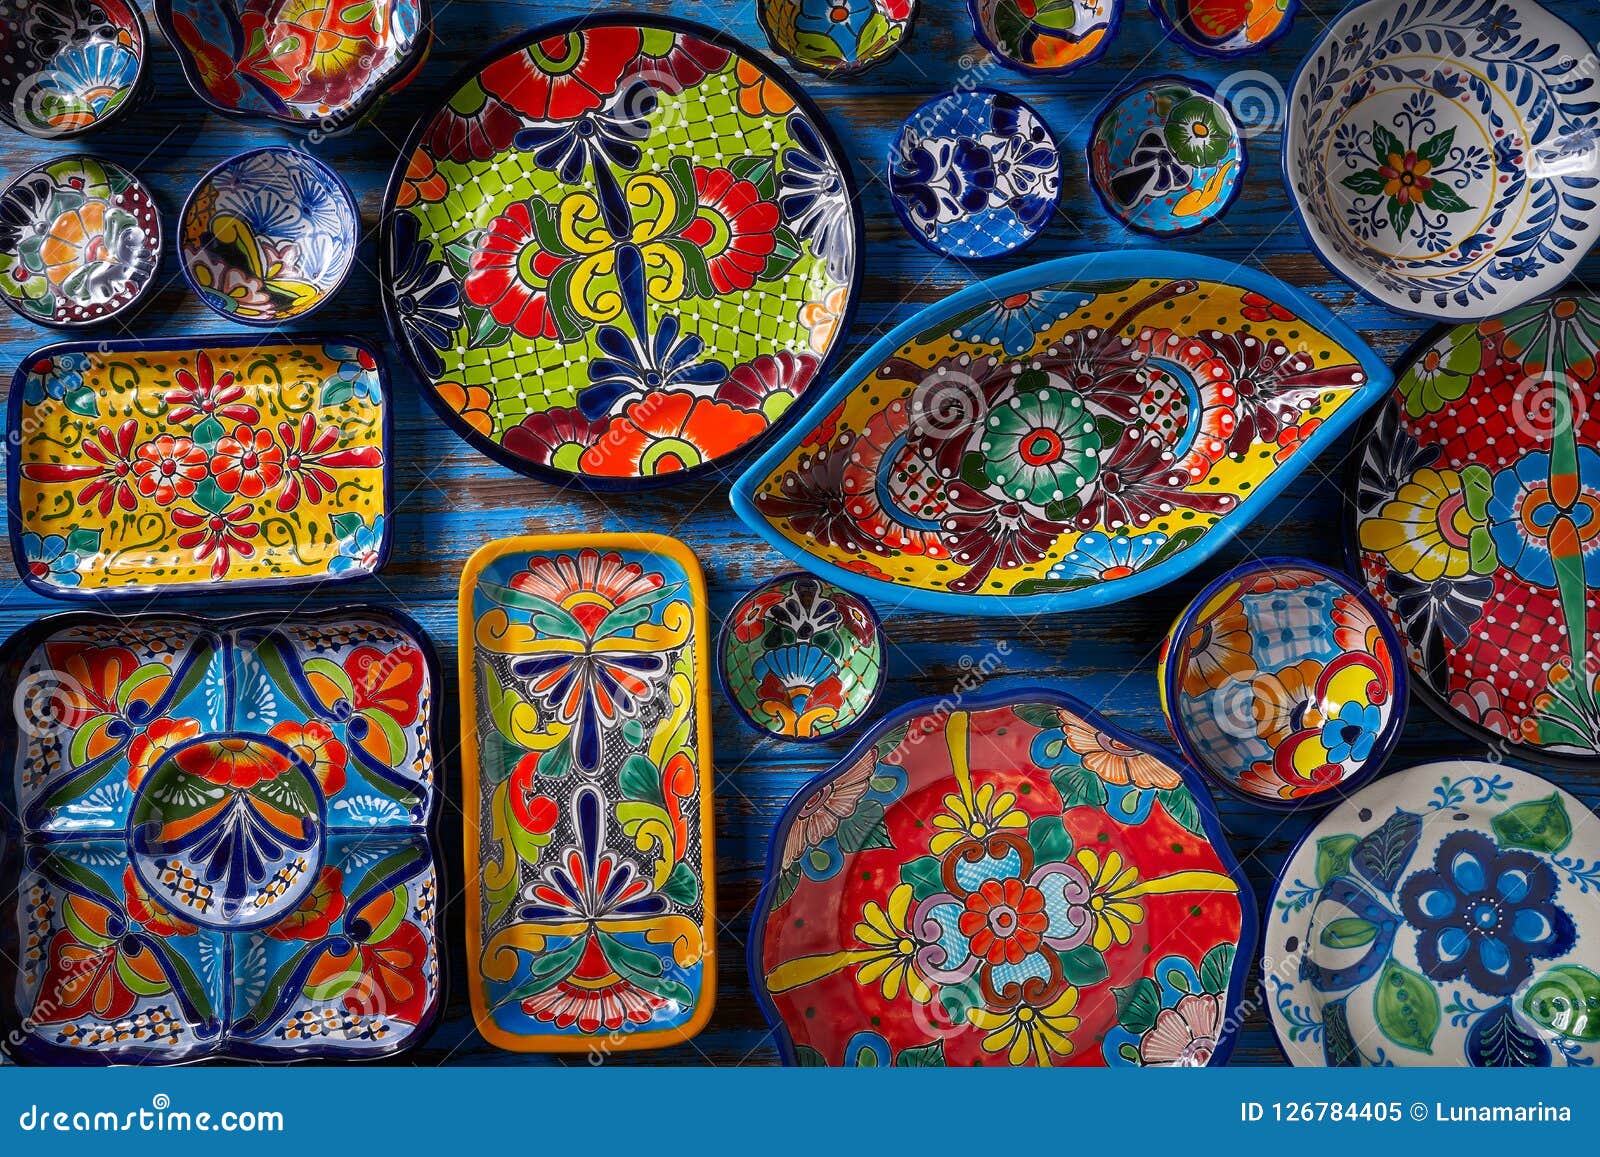 mexican pottery talavera style of mexico